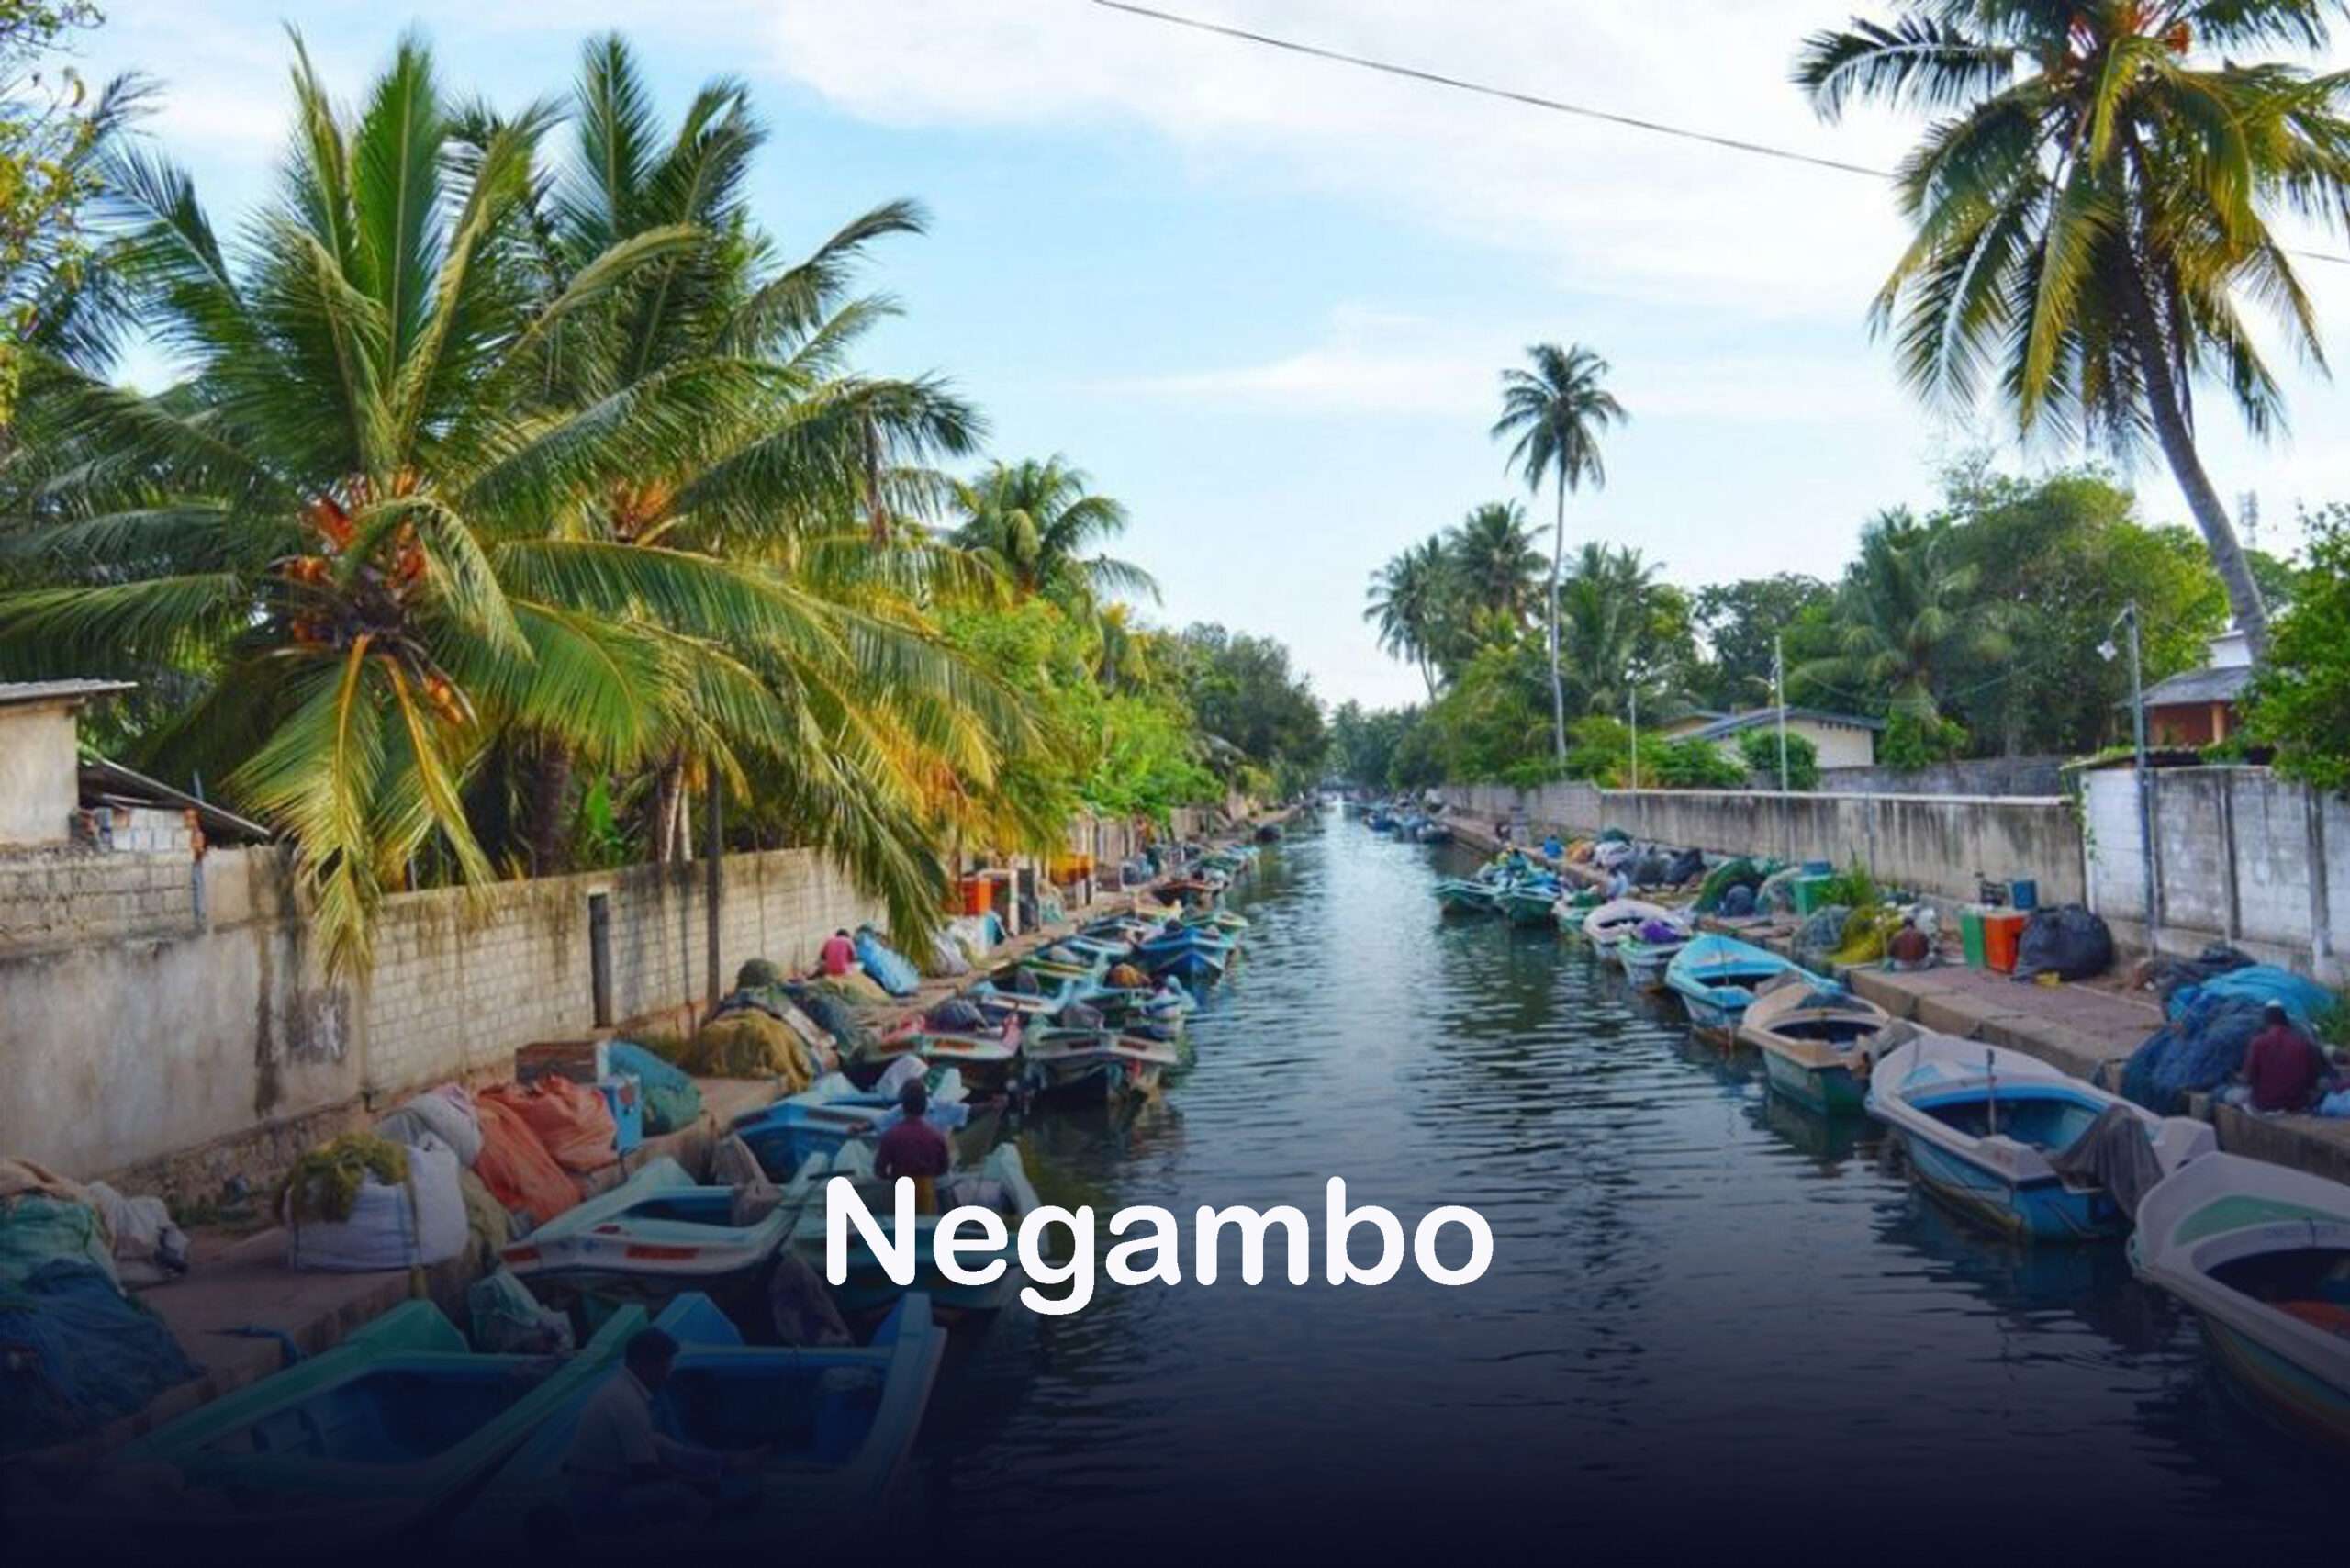 Negambo Sri Lanka Tour Guide